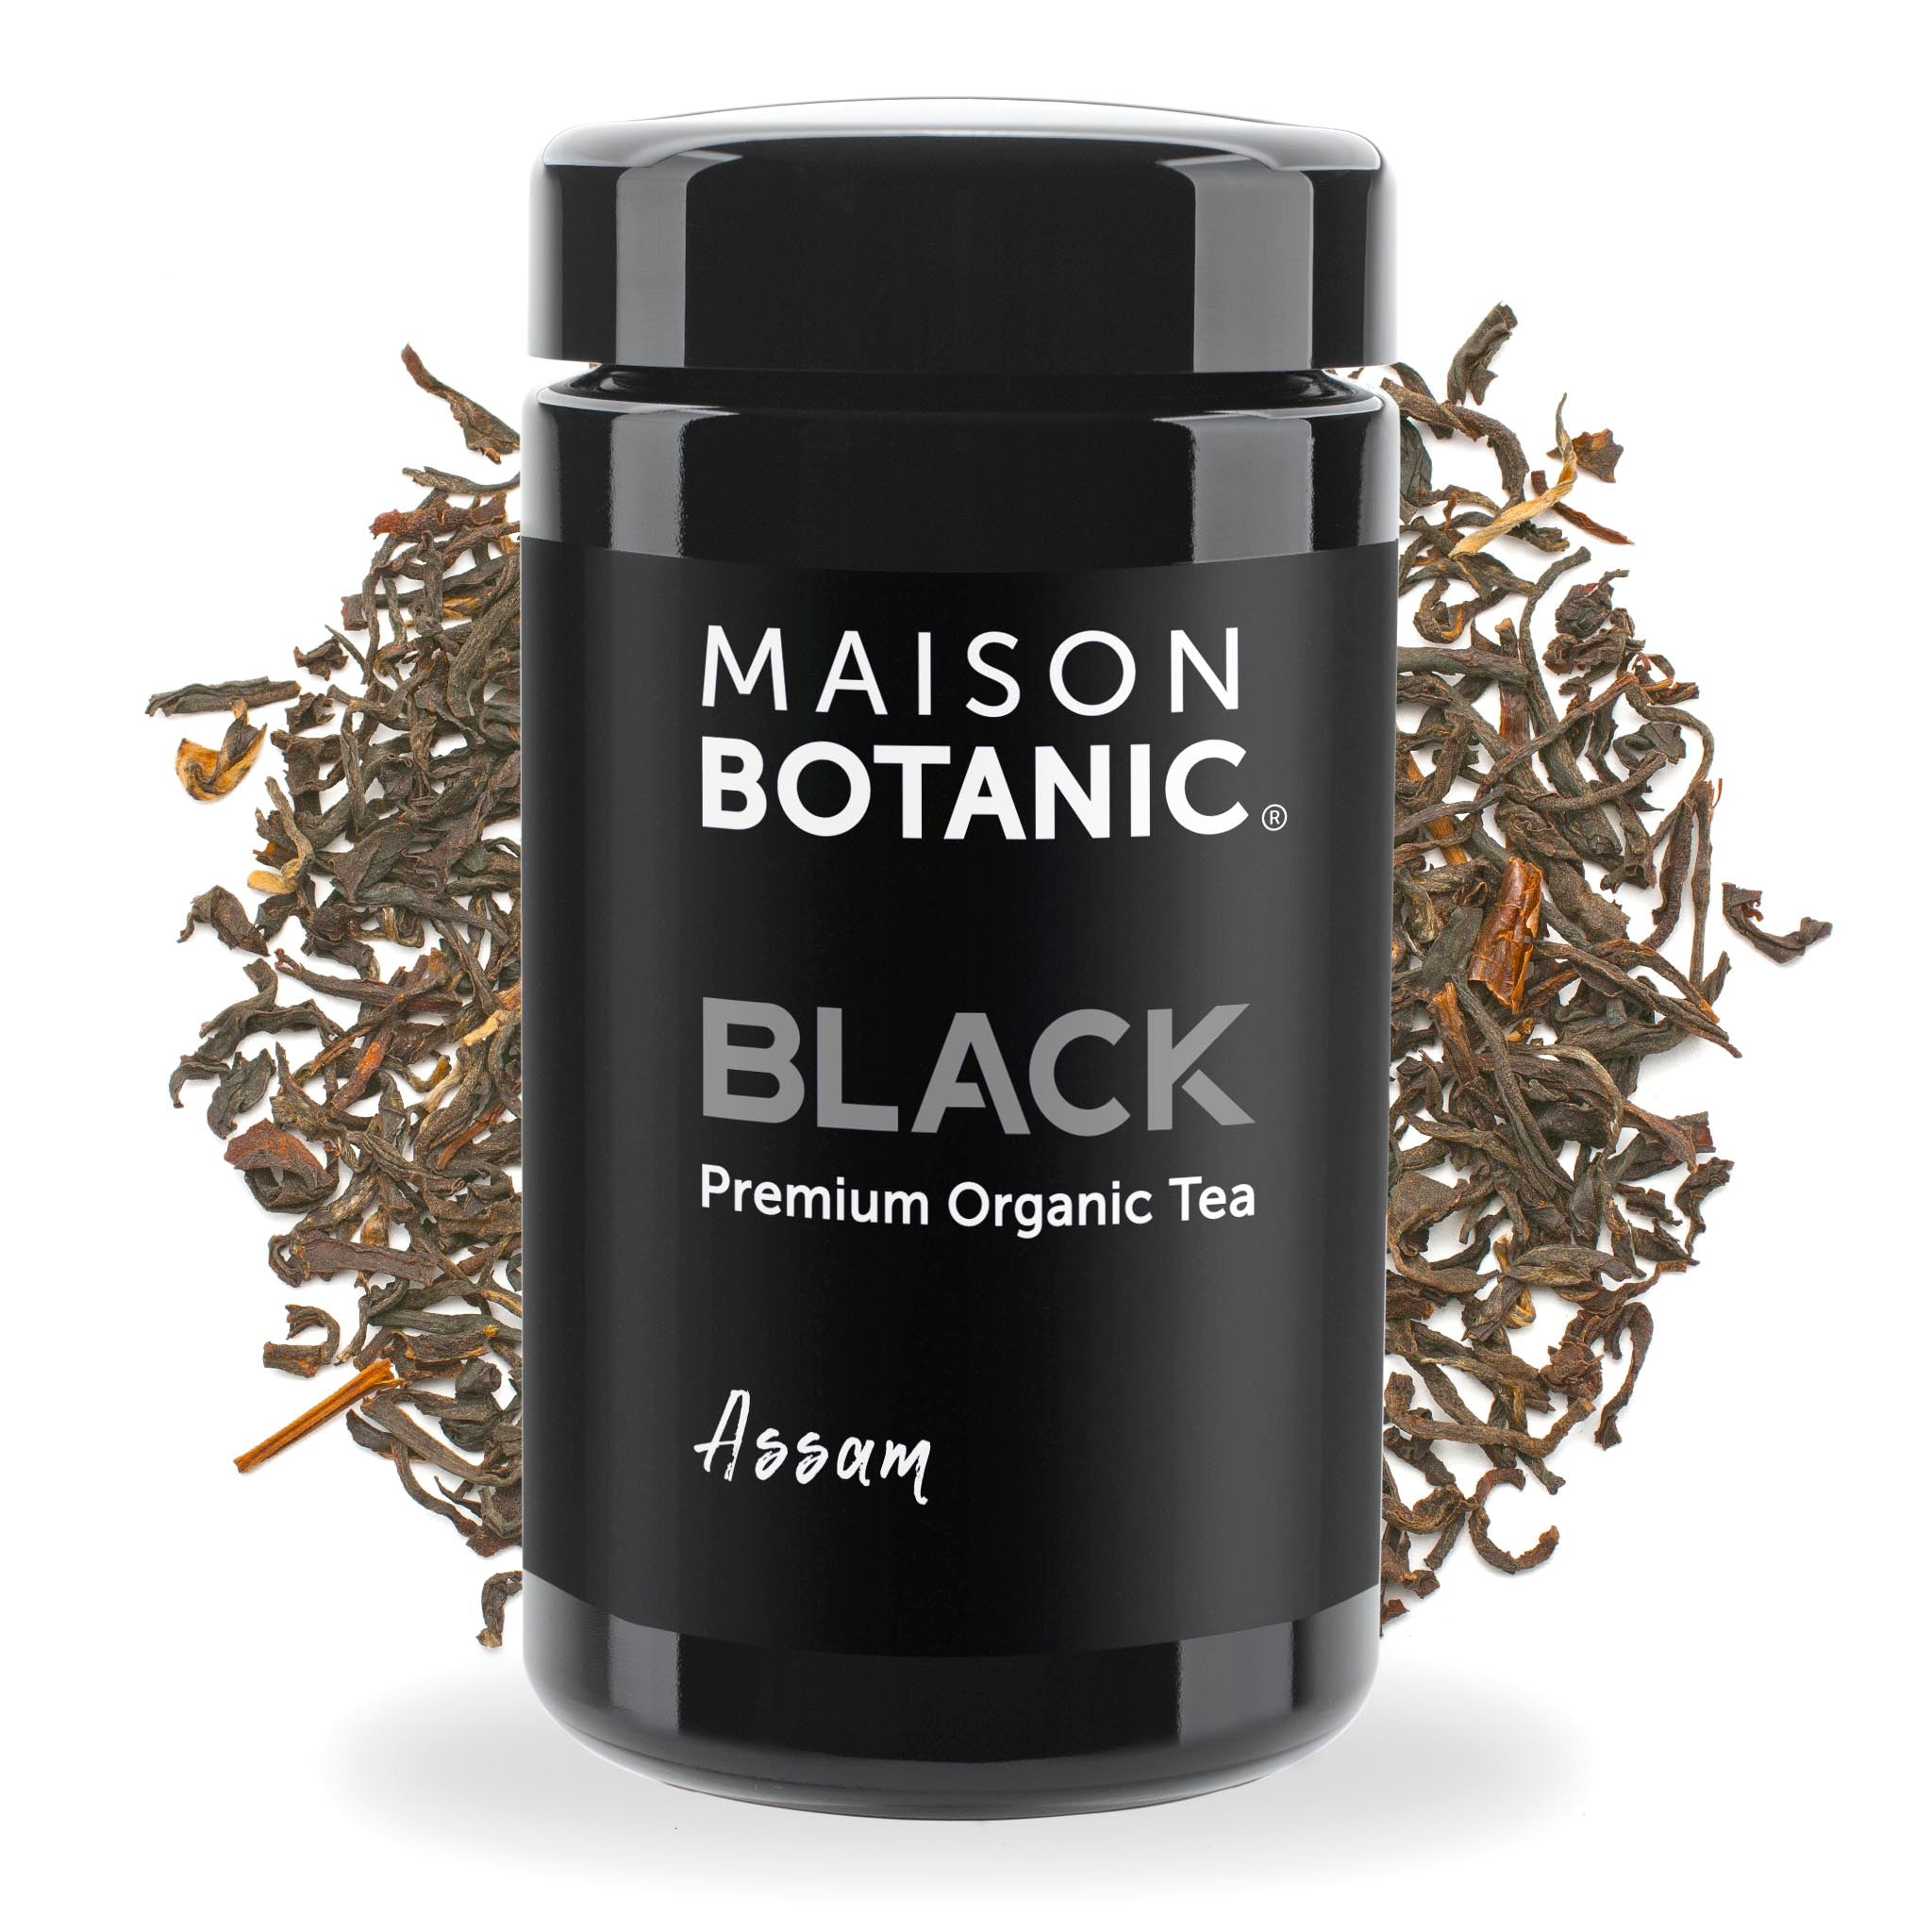 THE BLACK SELECTION - Organic Black Tea - Assam Tonganagaon